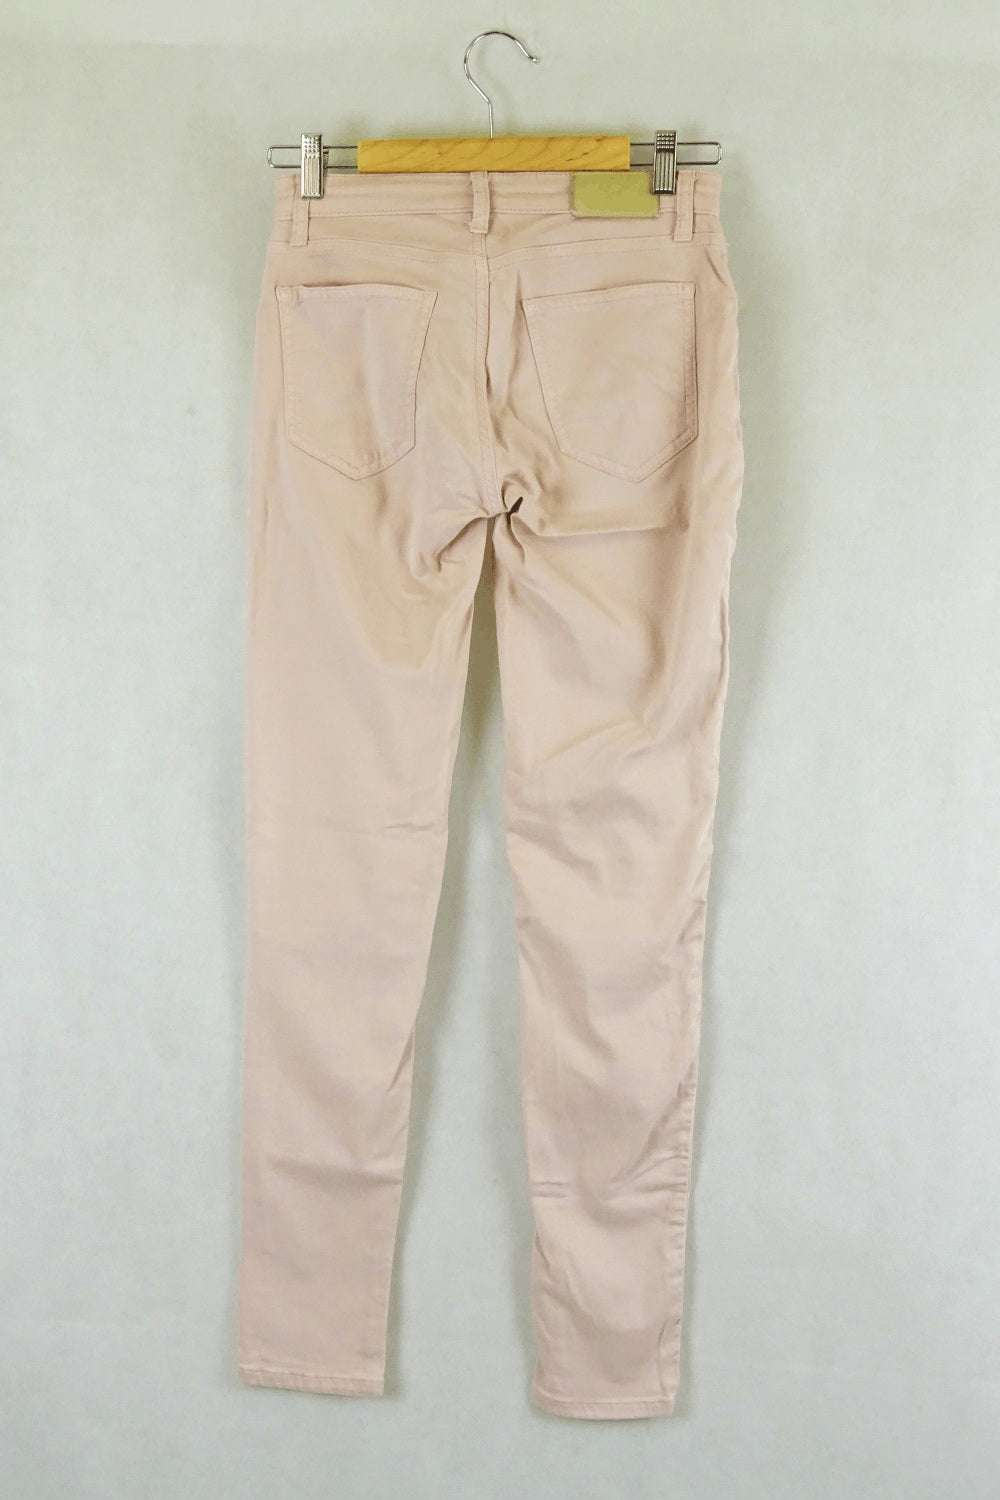 Saba Pale Pink Skinny Mid Rise Jeans 26 (Au 8)